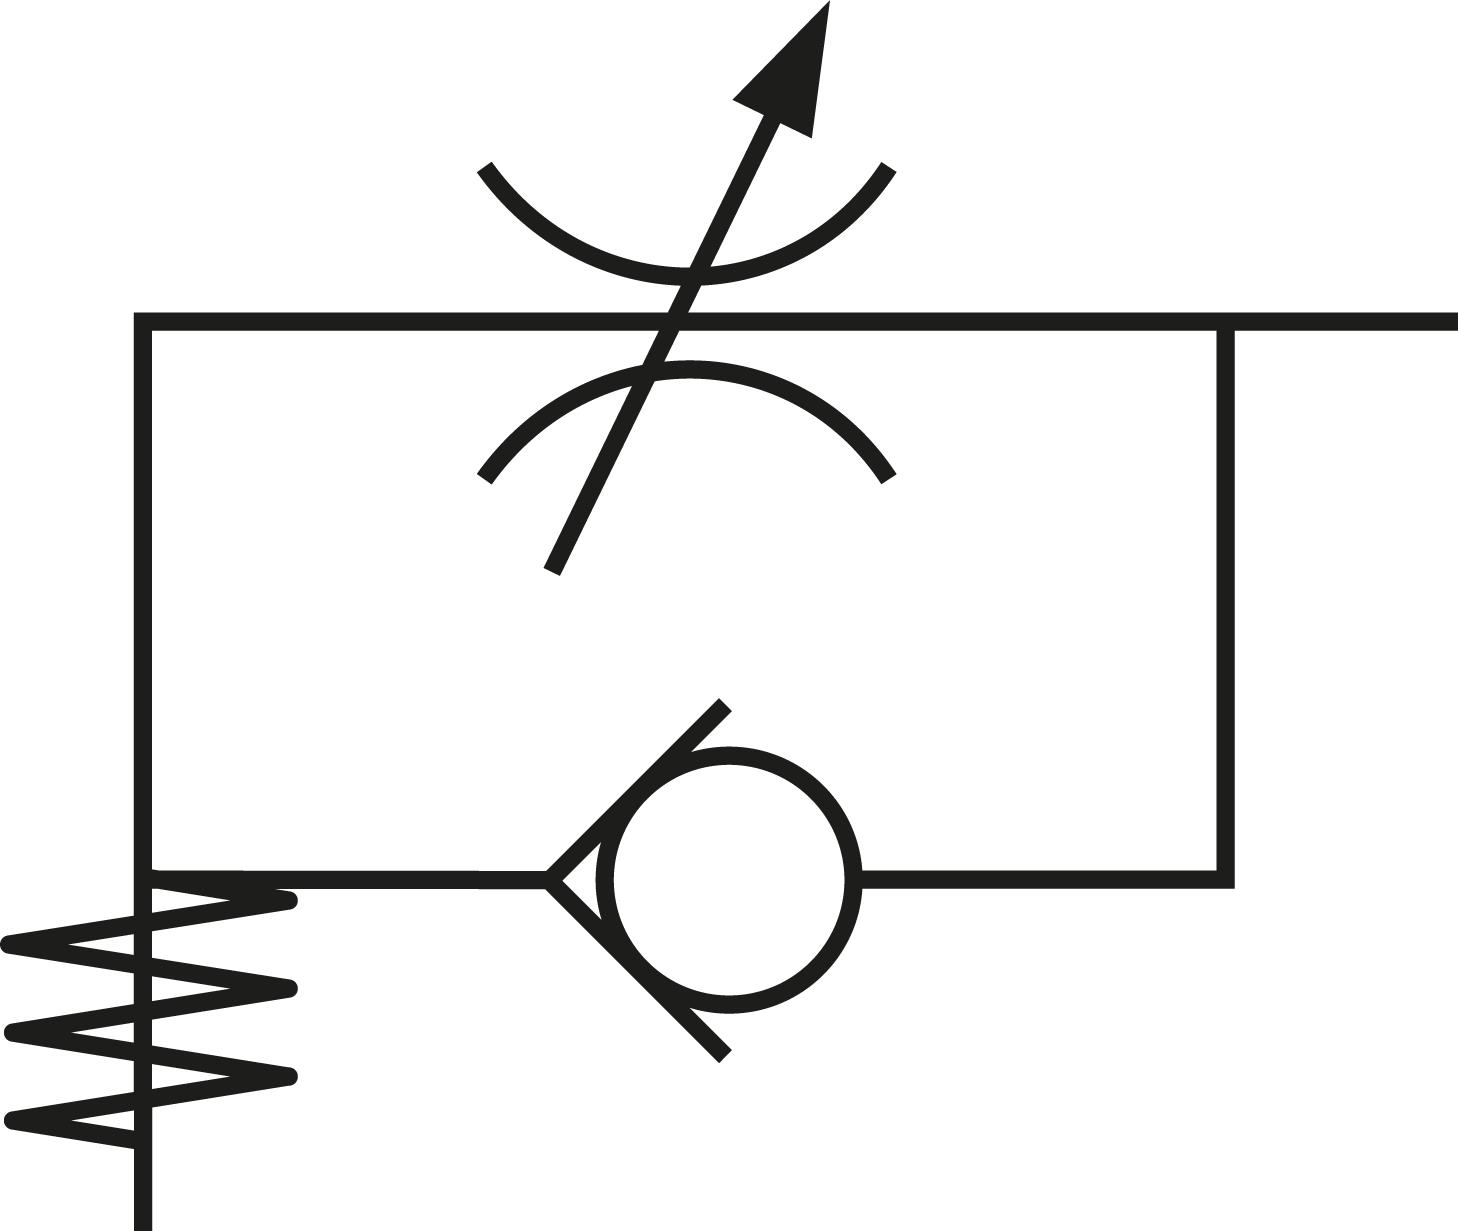 Schematic symbol: Supply air flow control